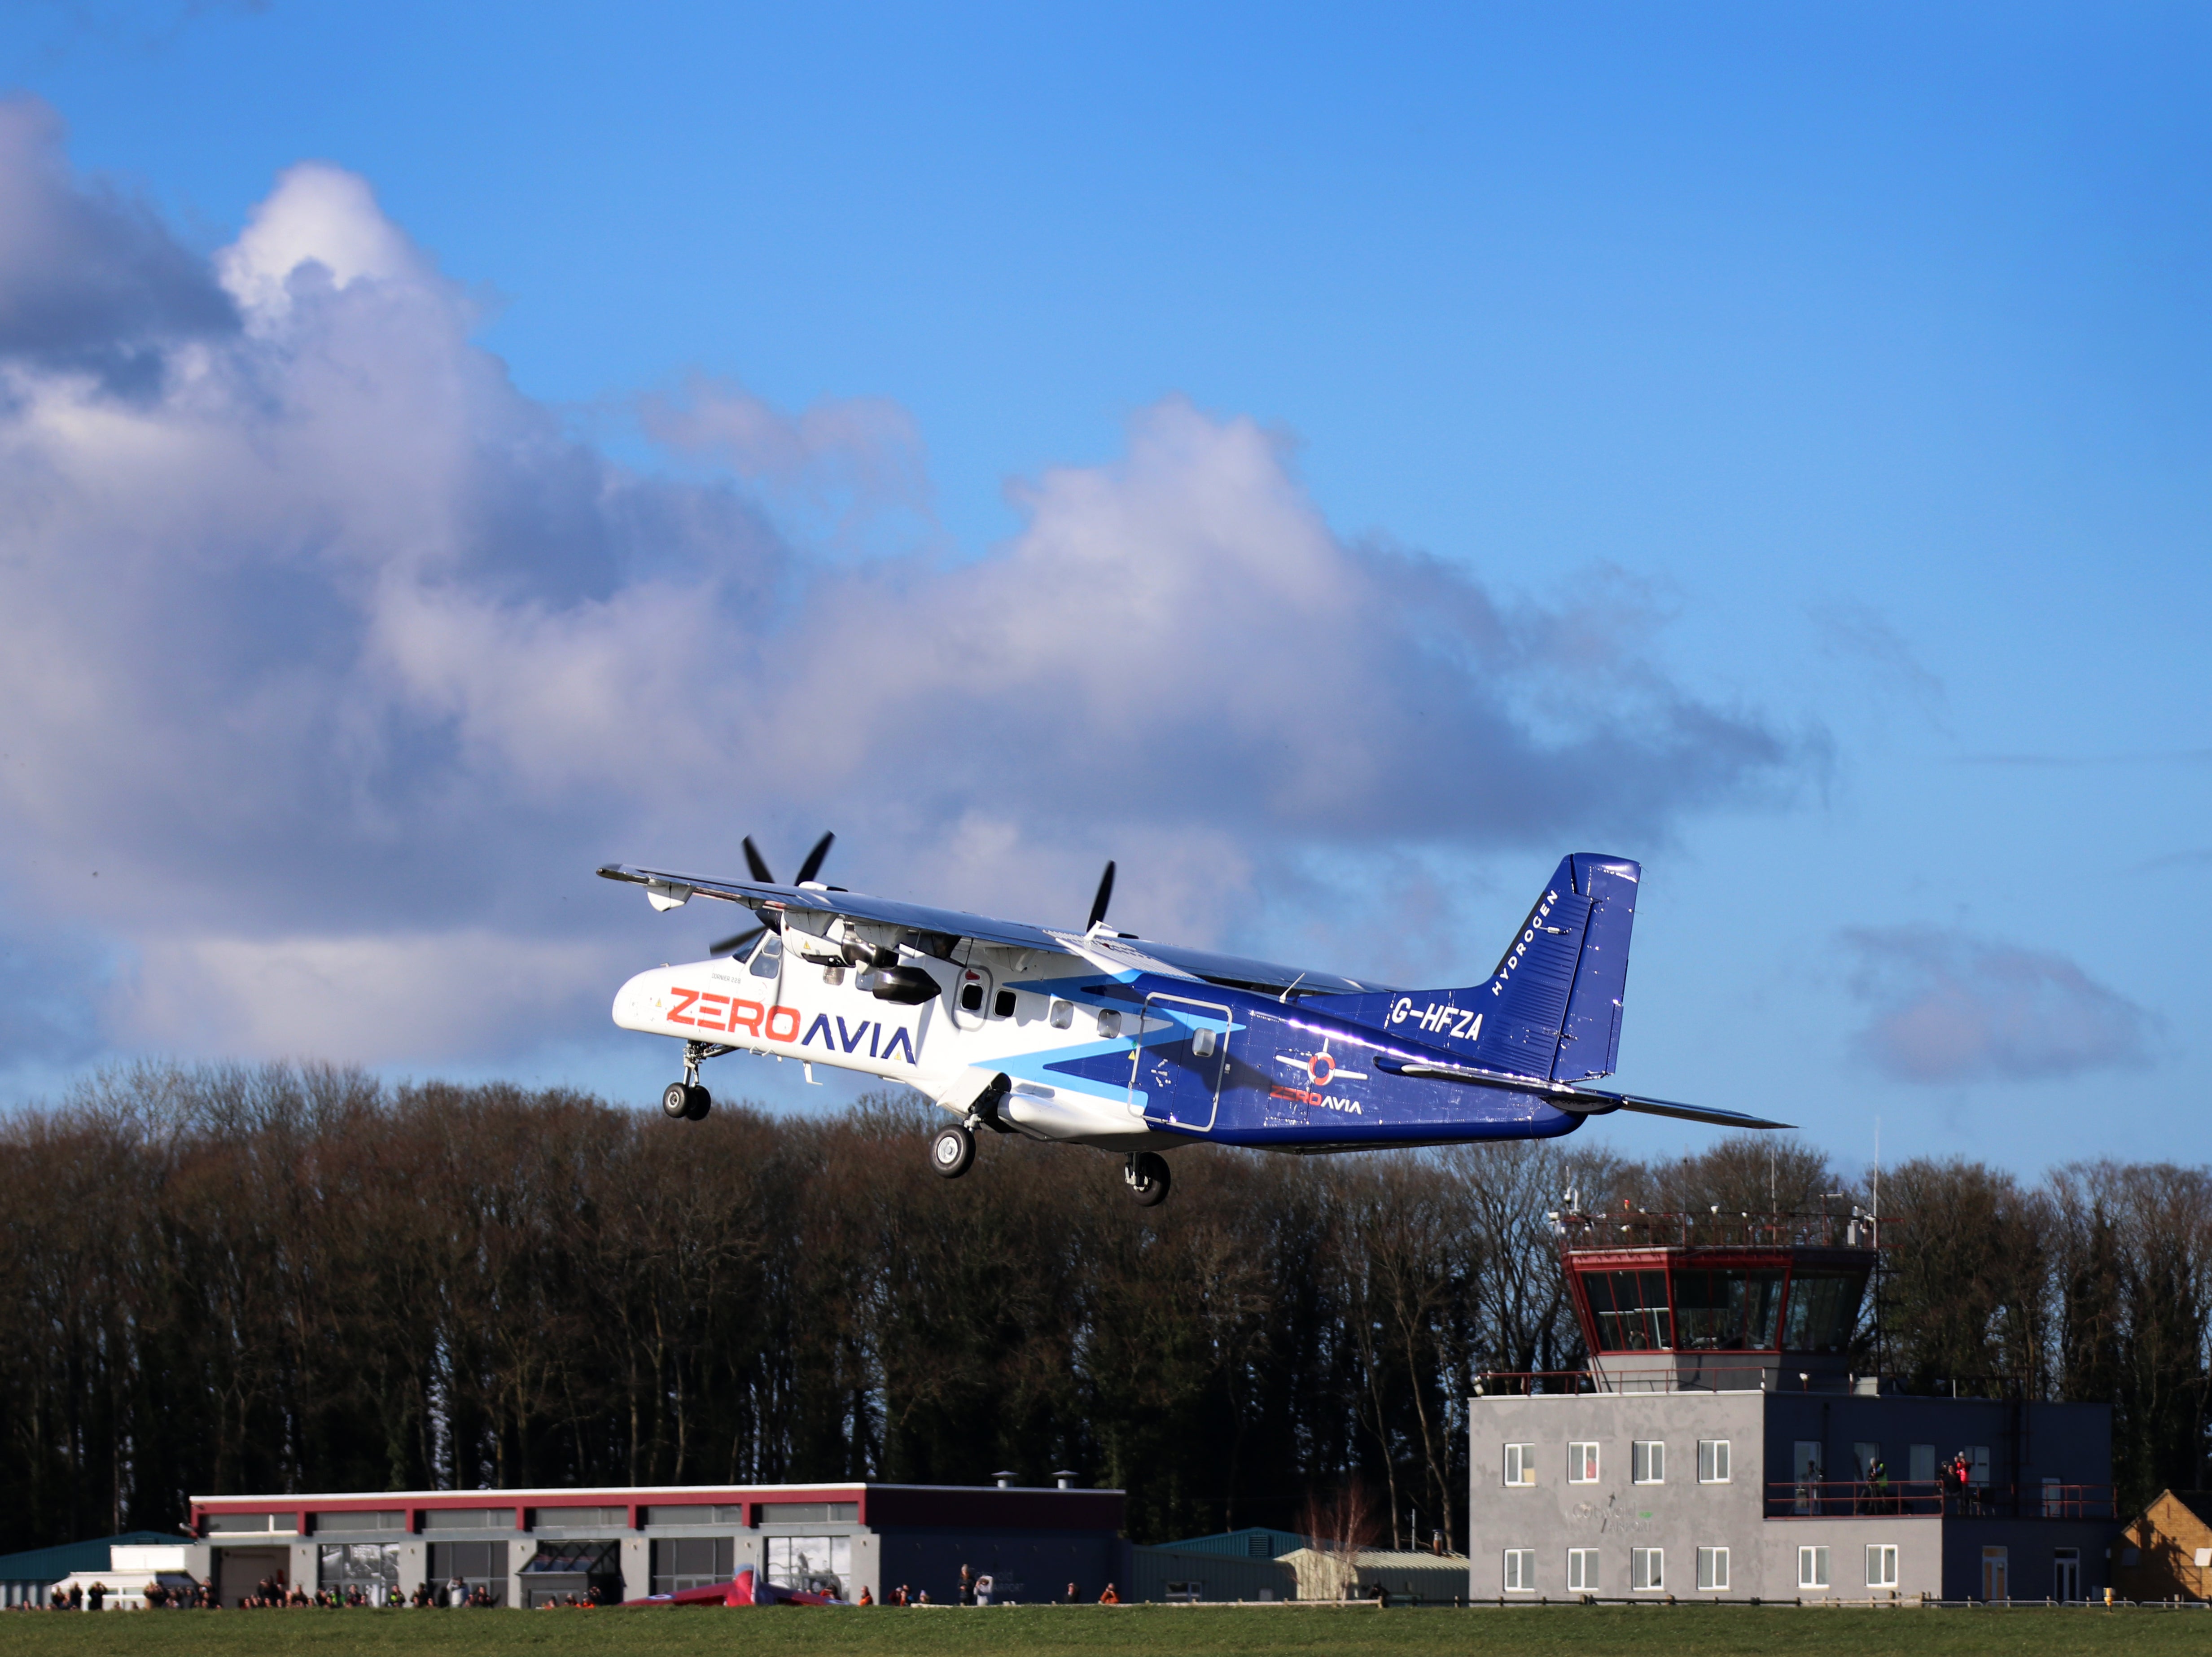 The adapted Dornier 228 departs Kemble aerodrome on Thursday